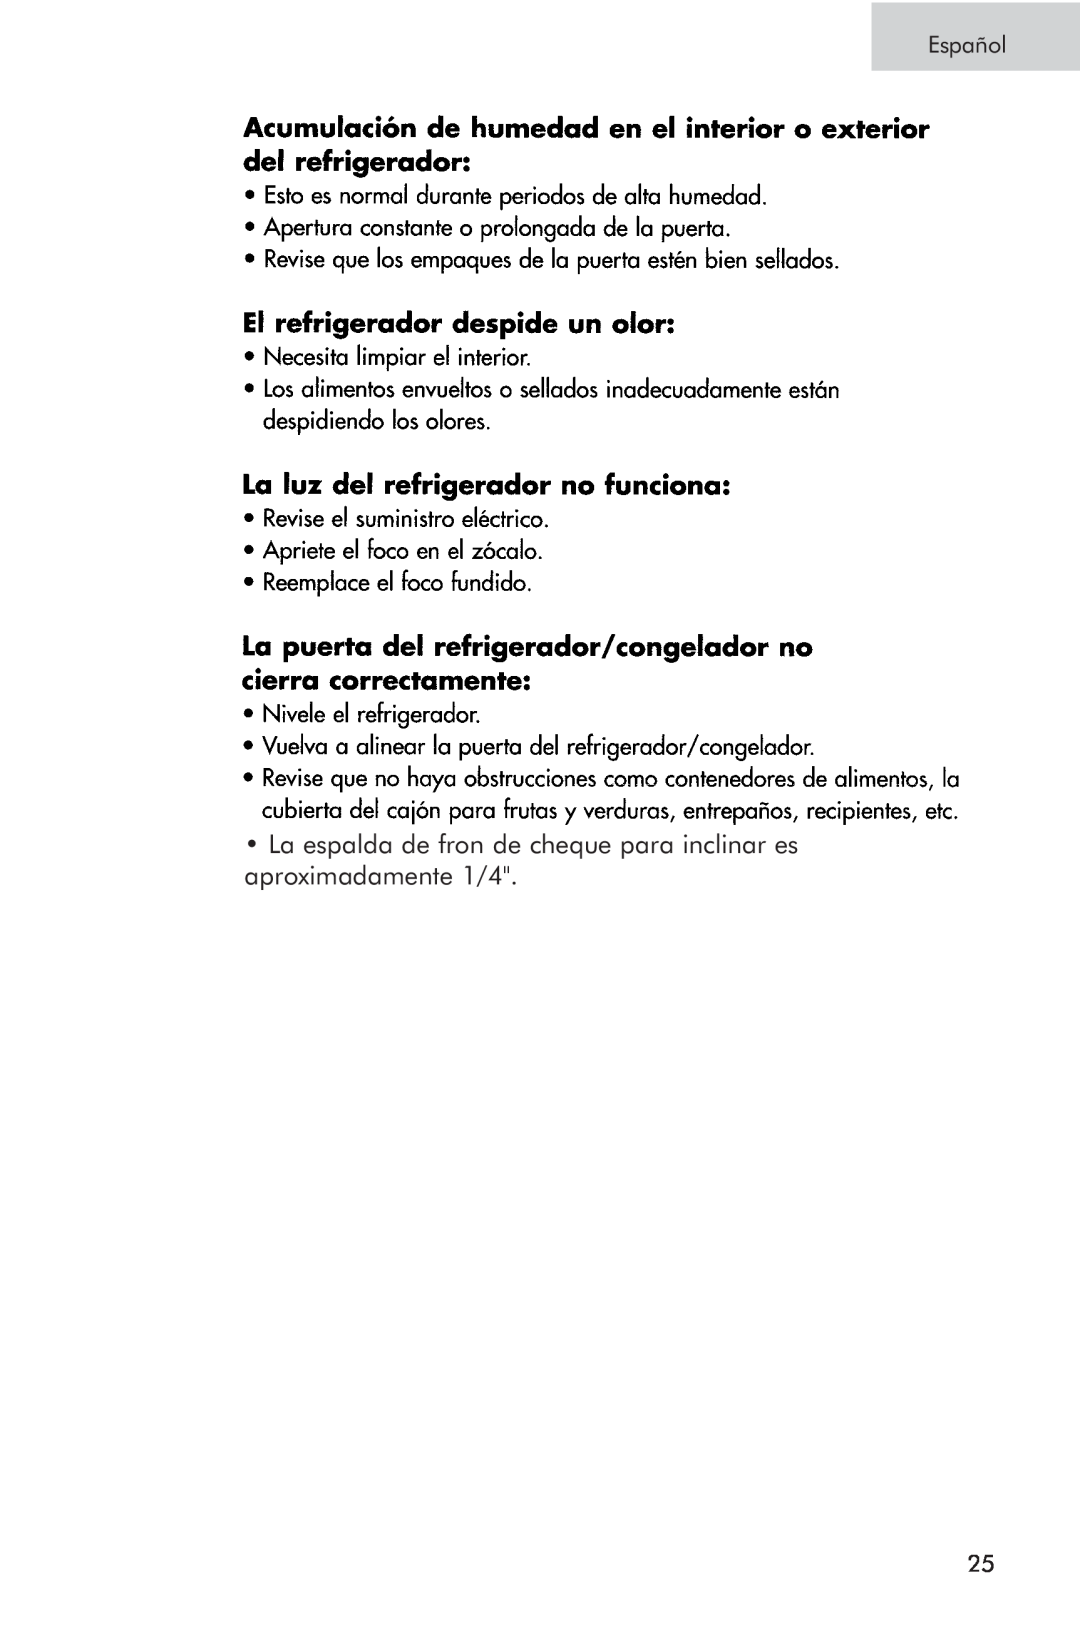 Haier PRTS, RRTG manual Español 